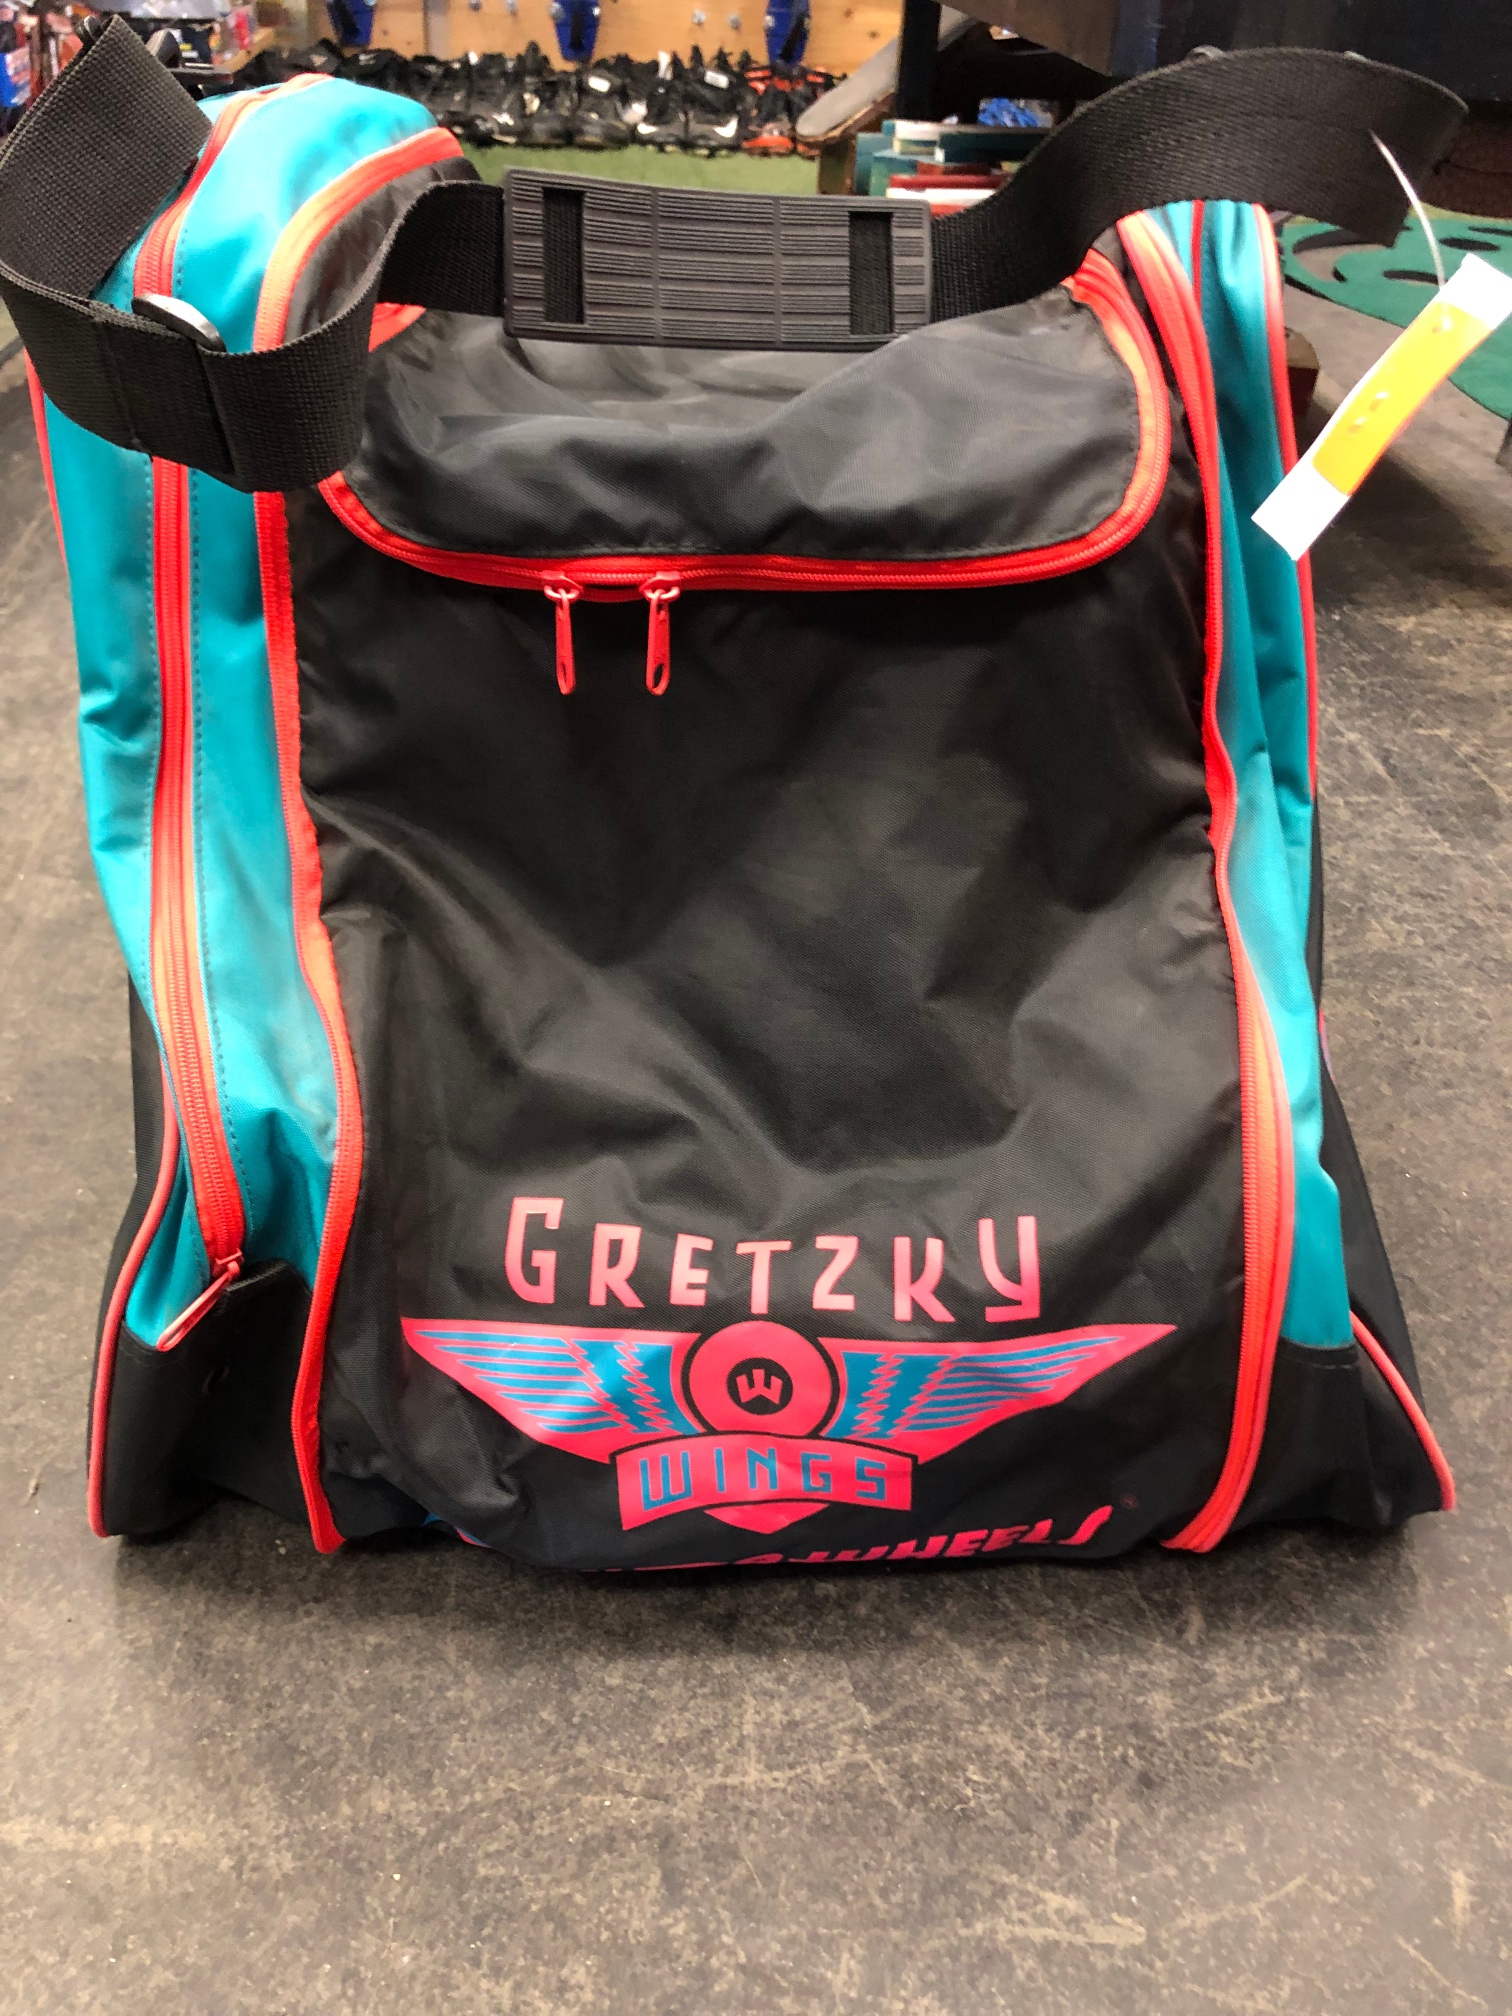 New Ultra Wheel Gretzky Skate bag